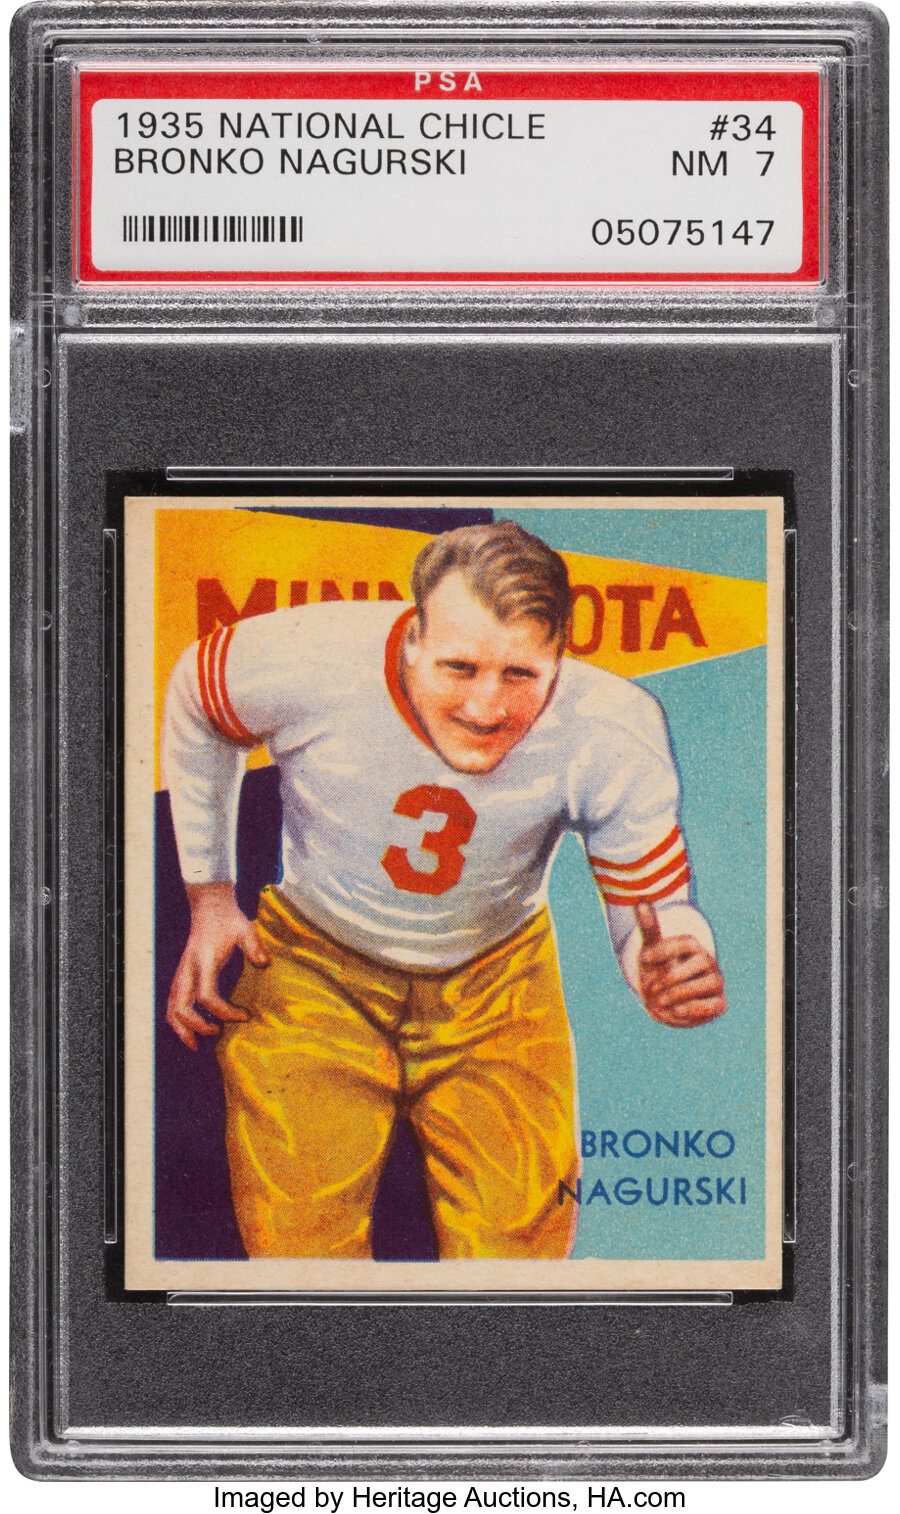 1935 National Chicle Bronko Nagurski Rookie #34 PSA NM 7